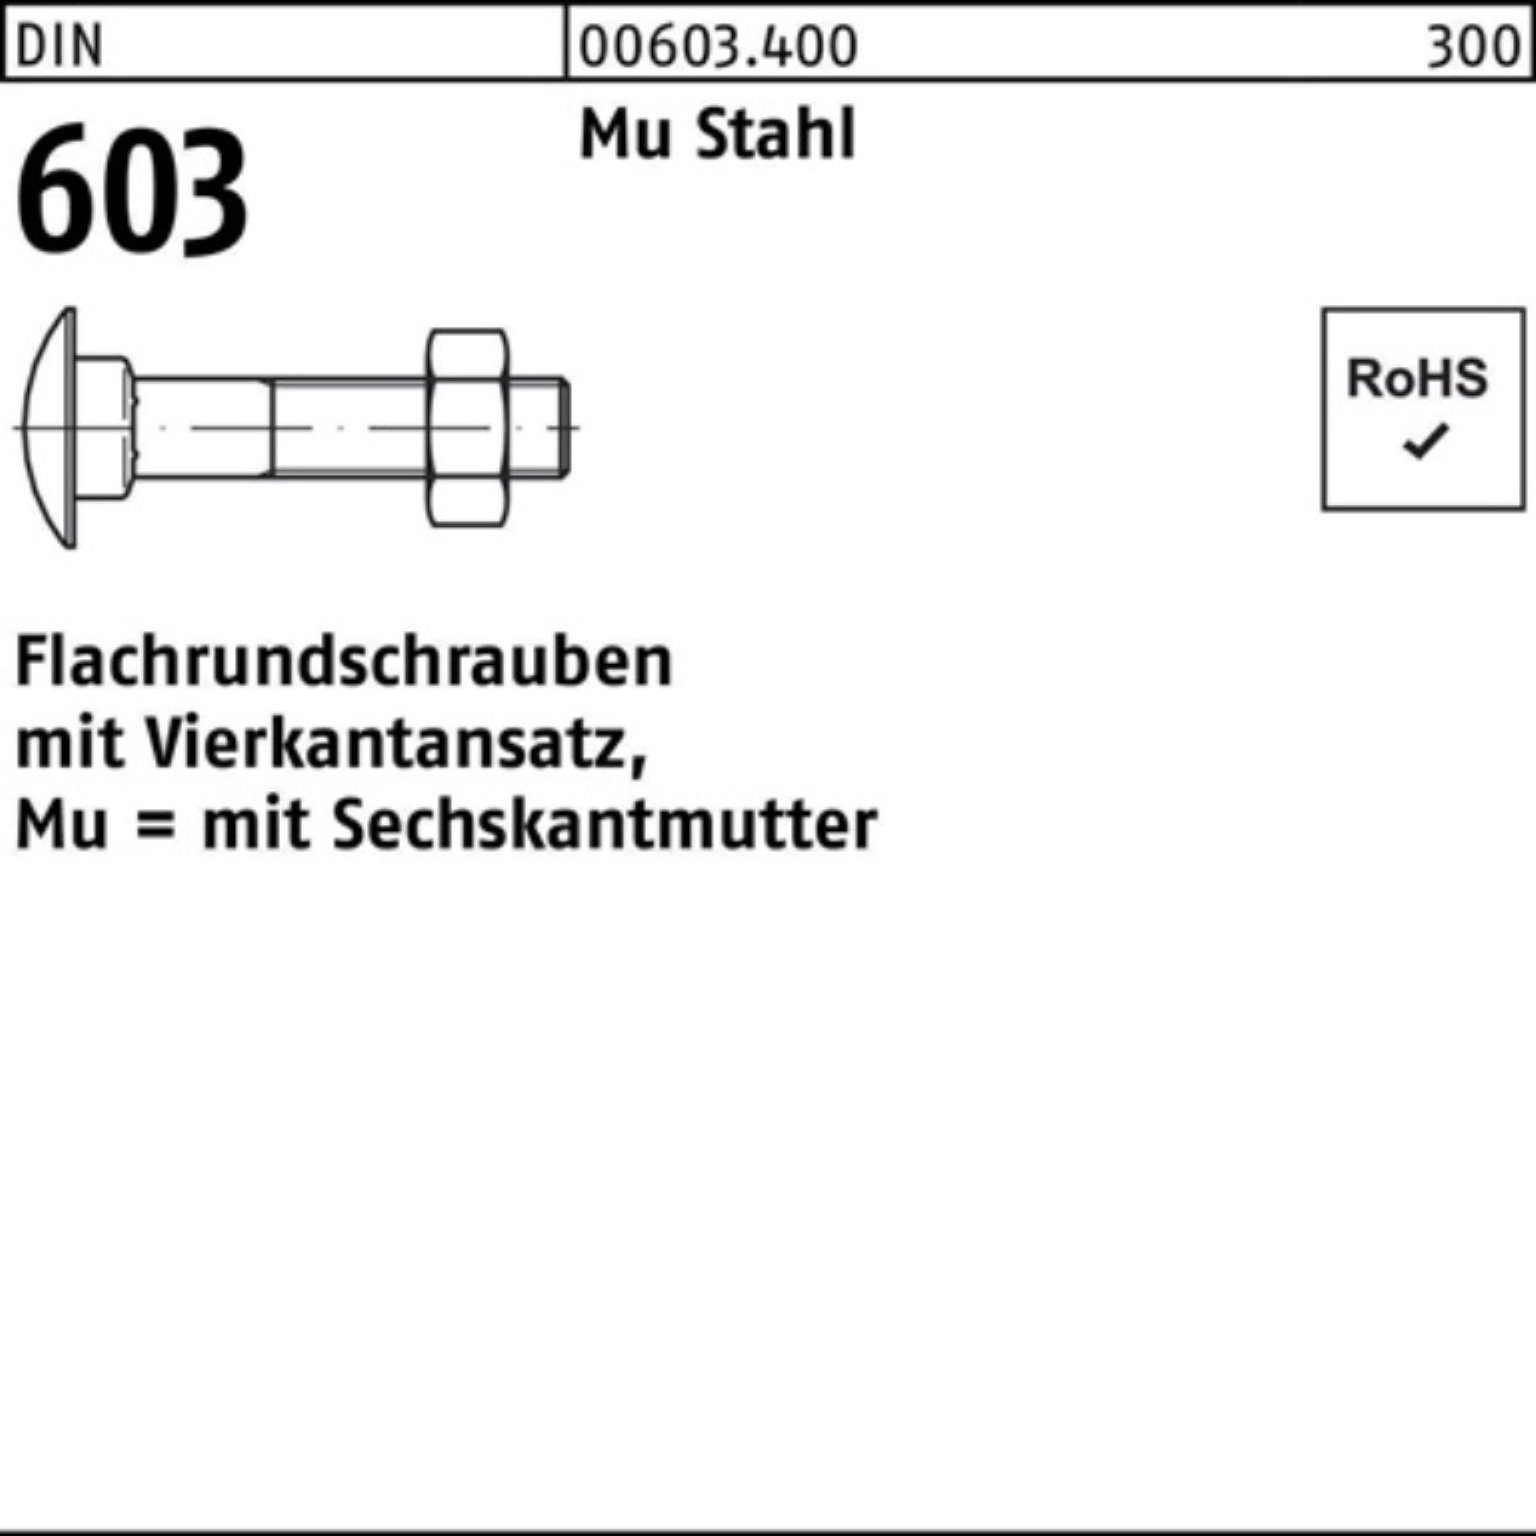 Flachrundschraube Pack Vierkantansatz/6-ktmutter Schraube 603 Reyher DIN M12x90 100er